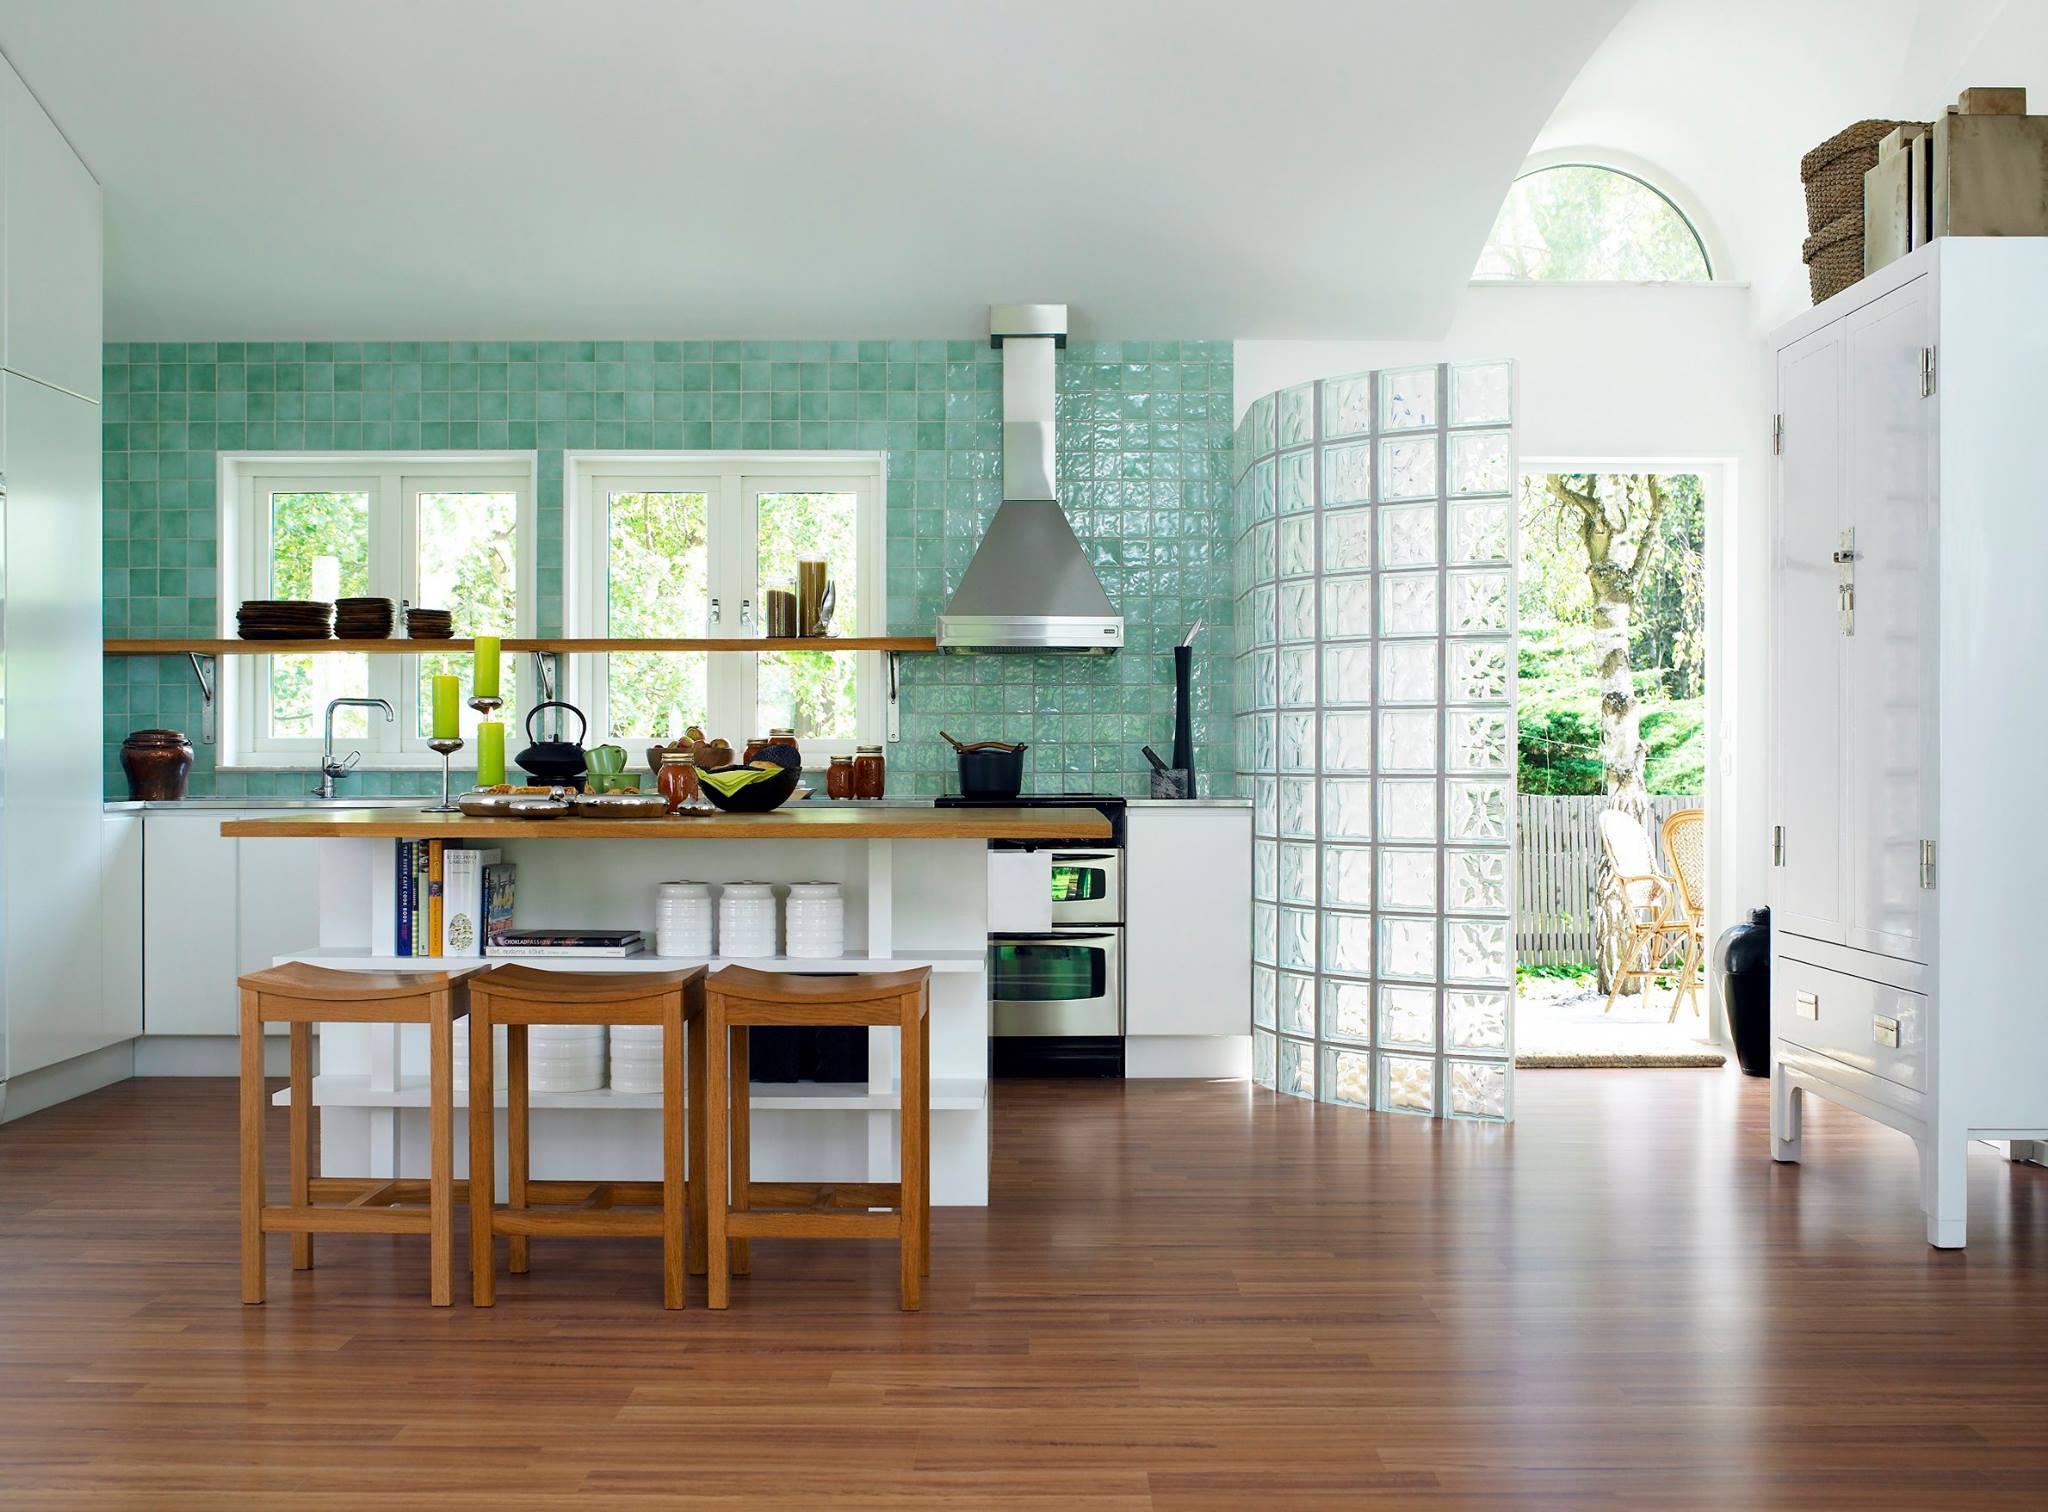 Top Kitchen Flooring Options In Singapore, Laminate Tile Flooring Kitchen B Quarters